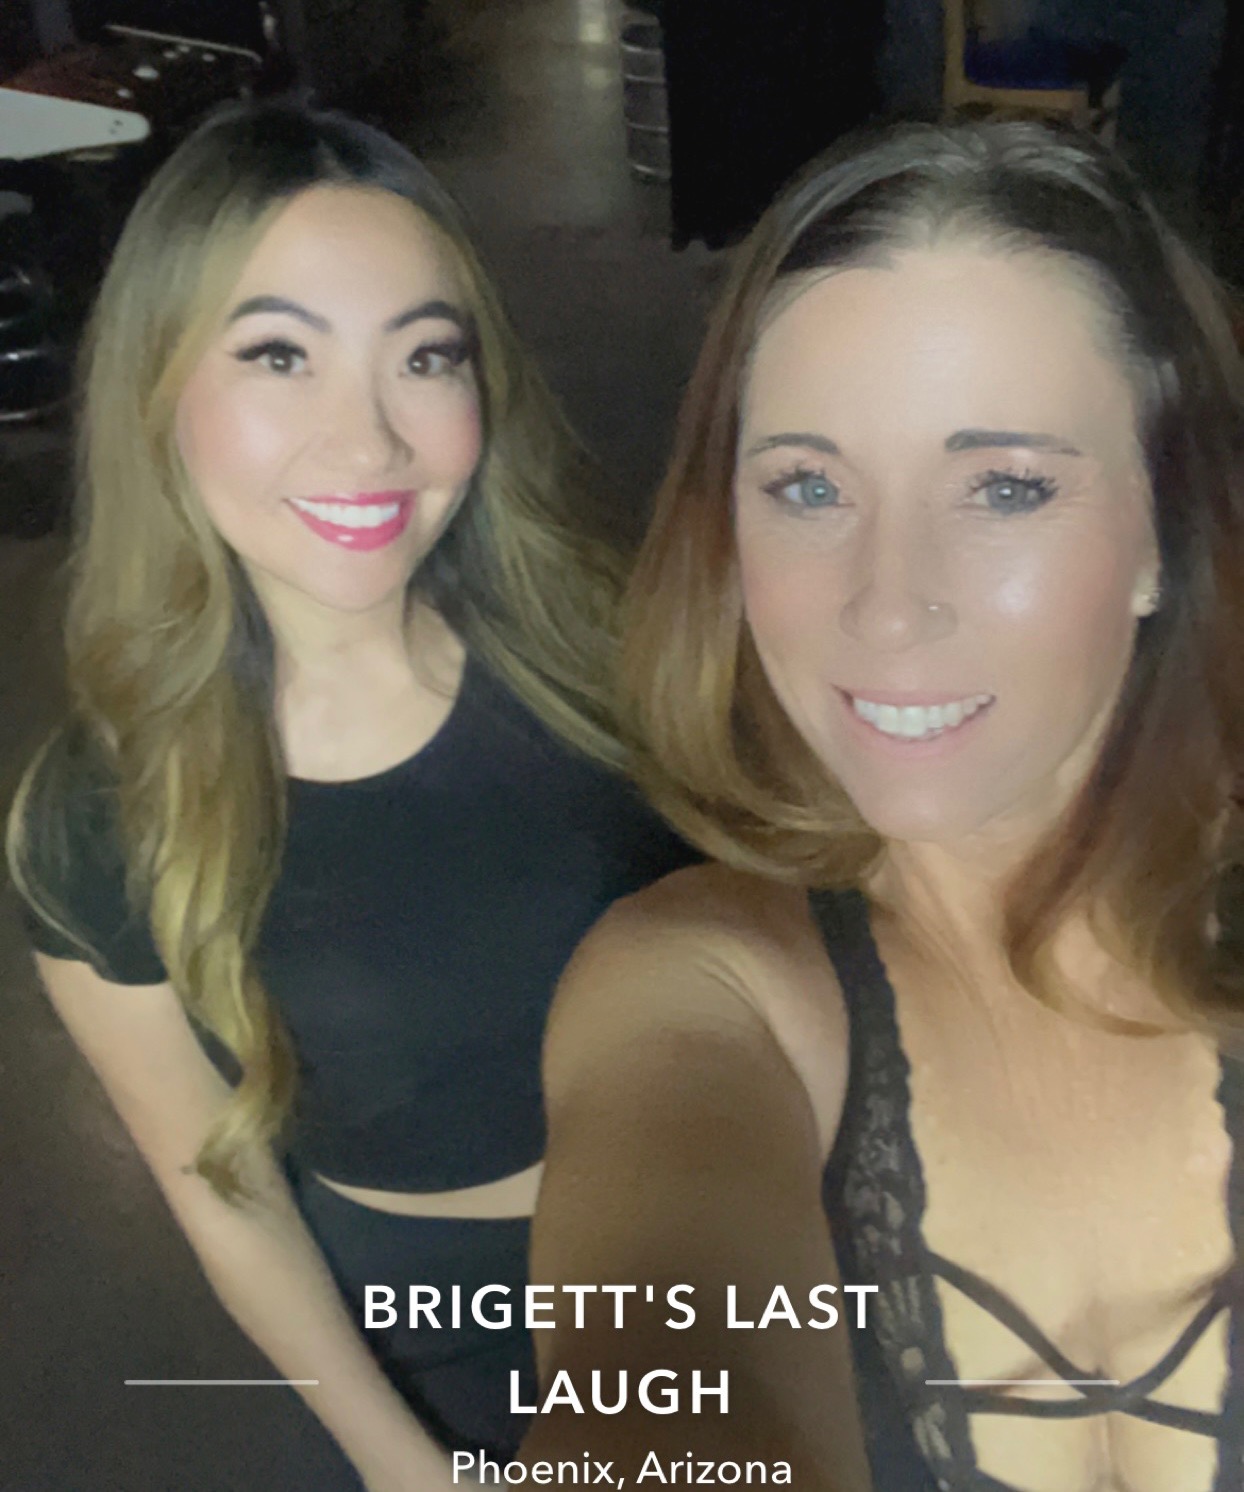 Two bartenders at Brigett's last laugh